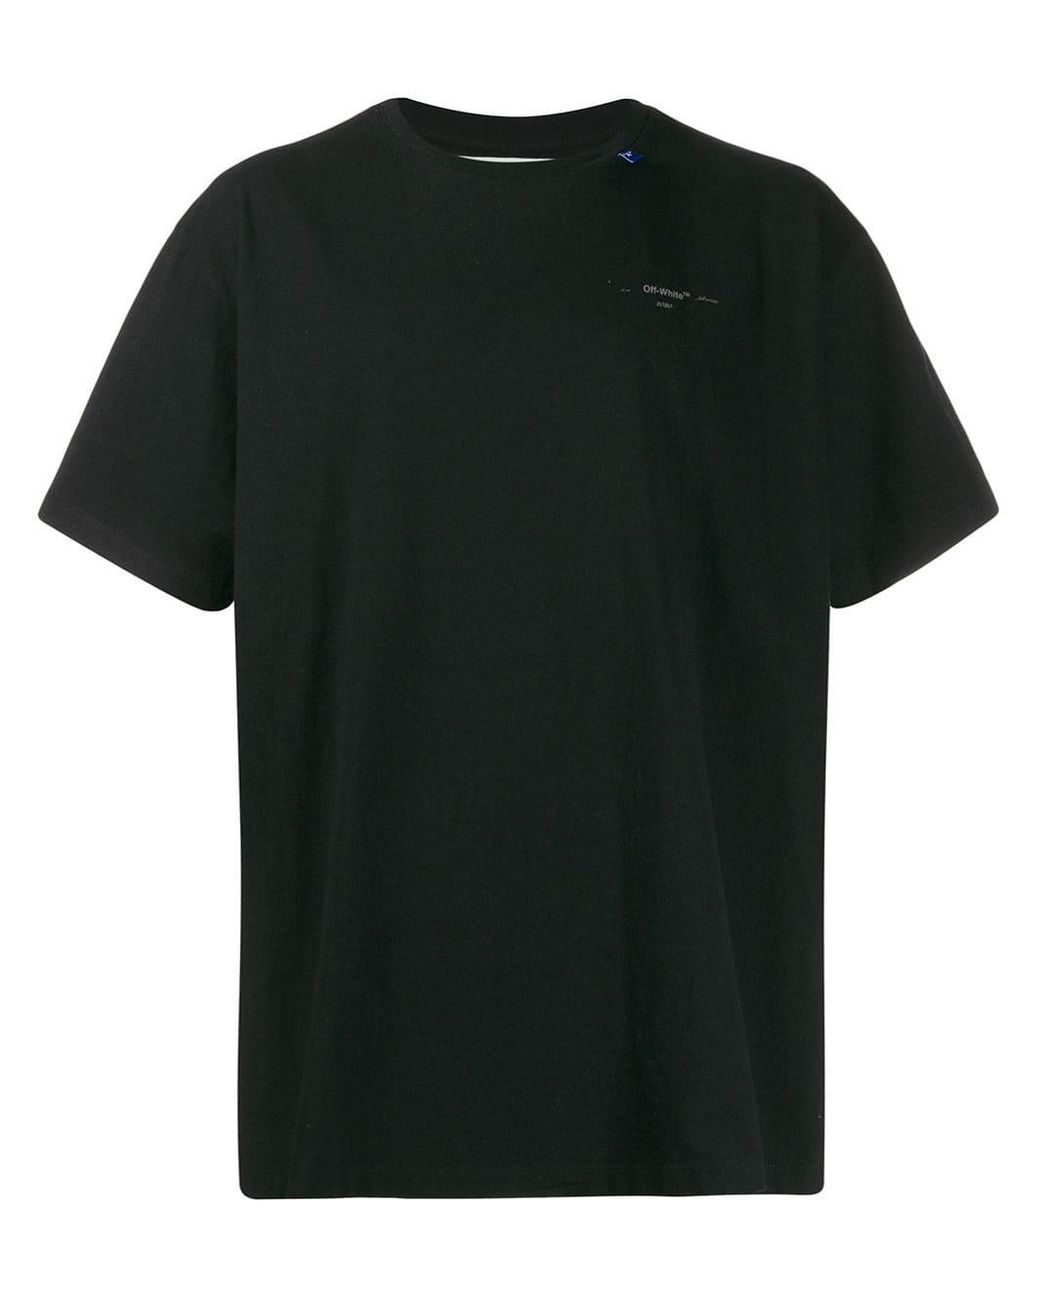 Pre Loved - Off White Black Logo T Shirt Size Medium